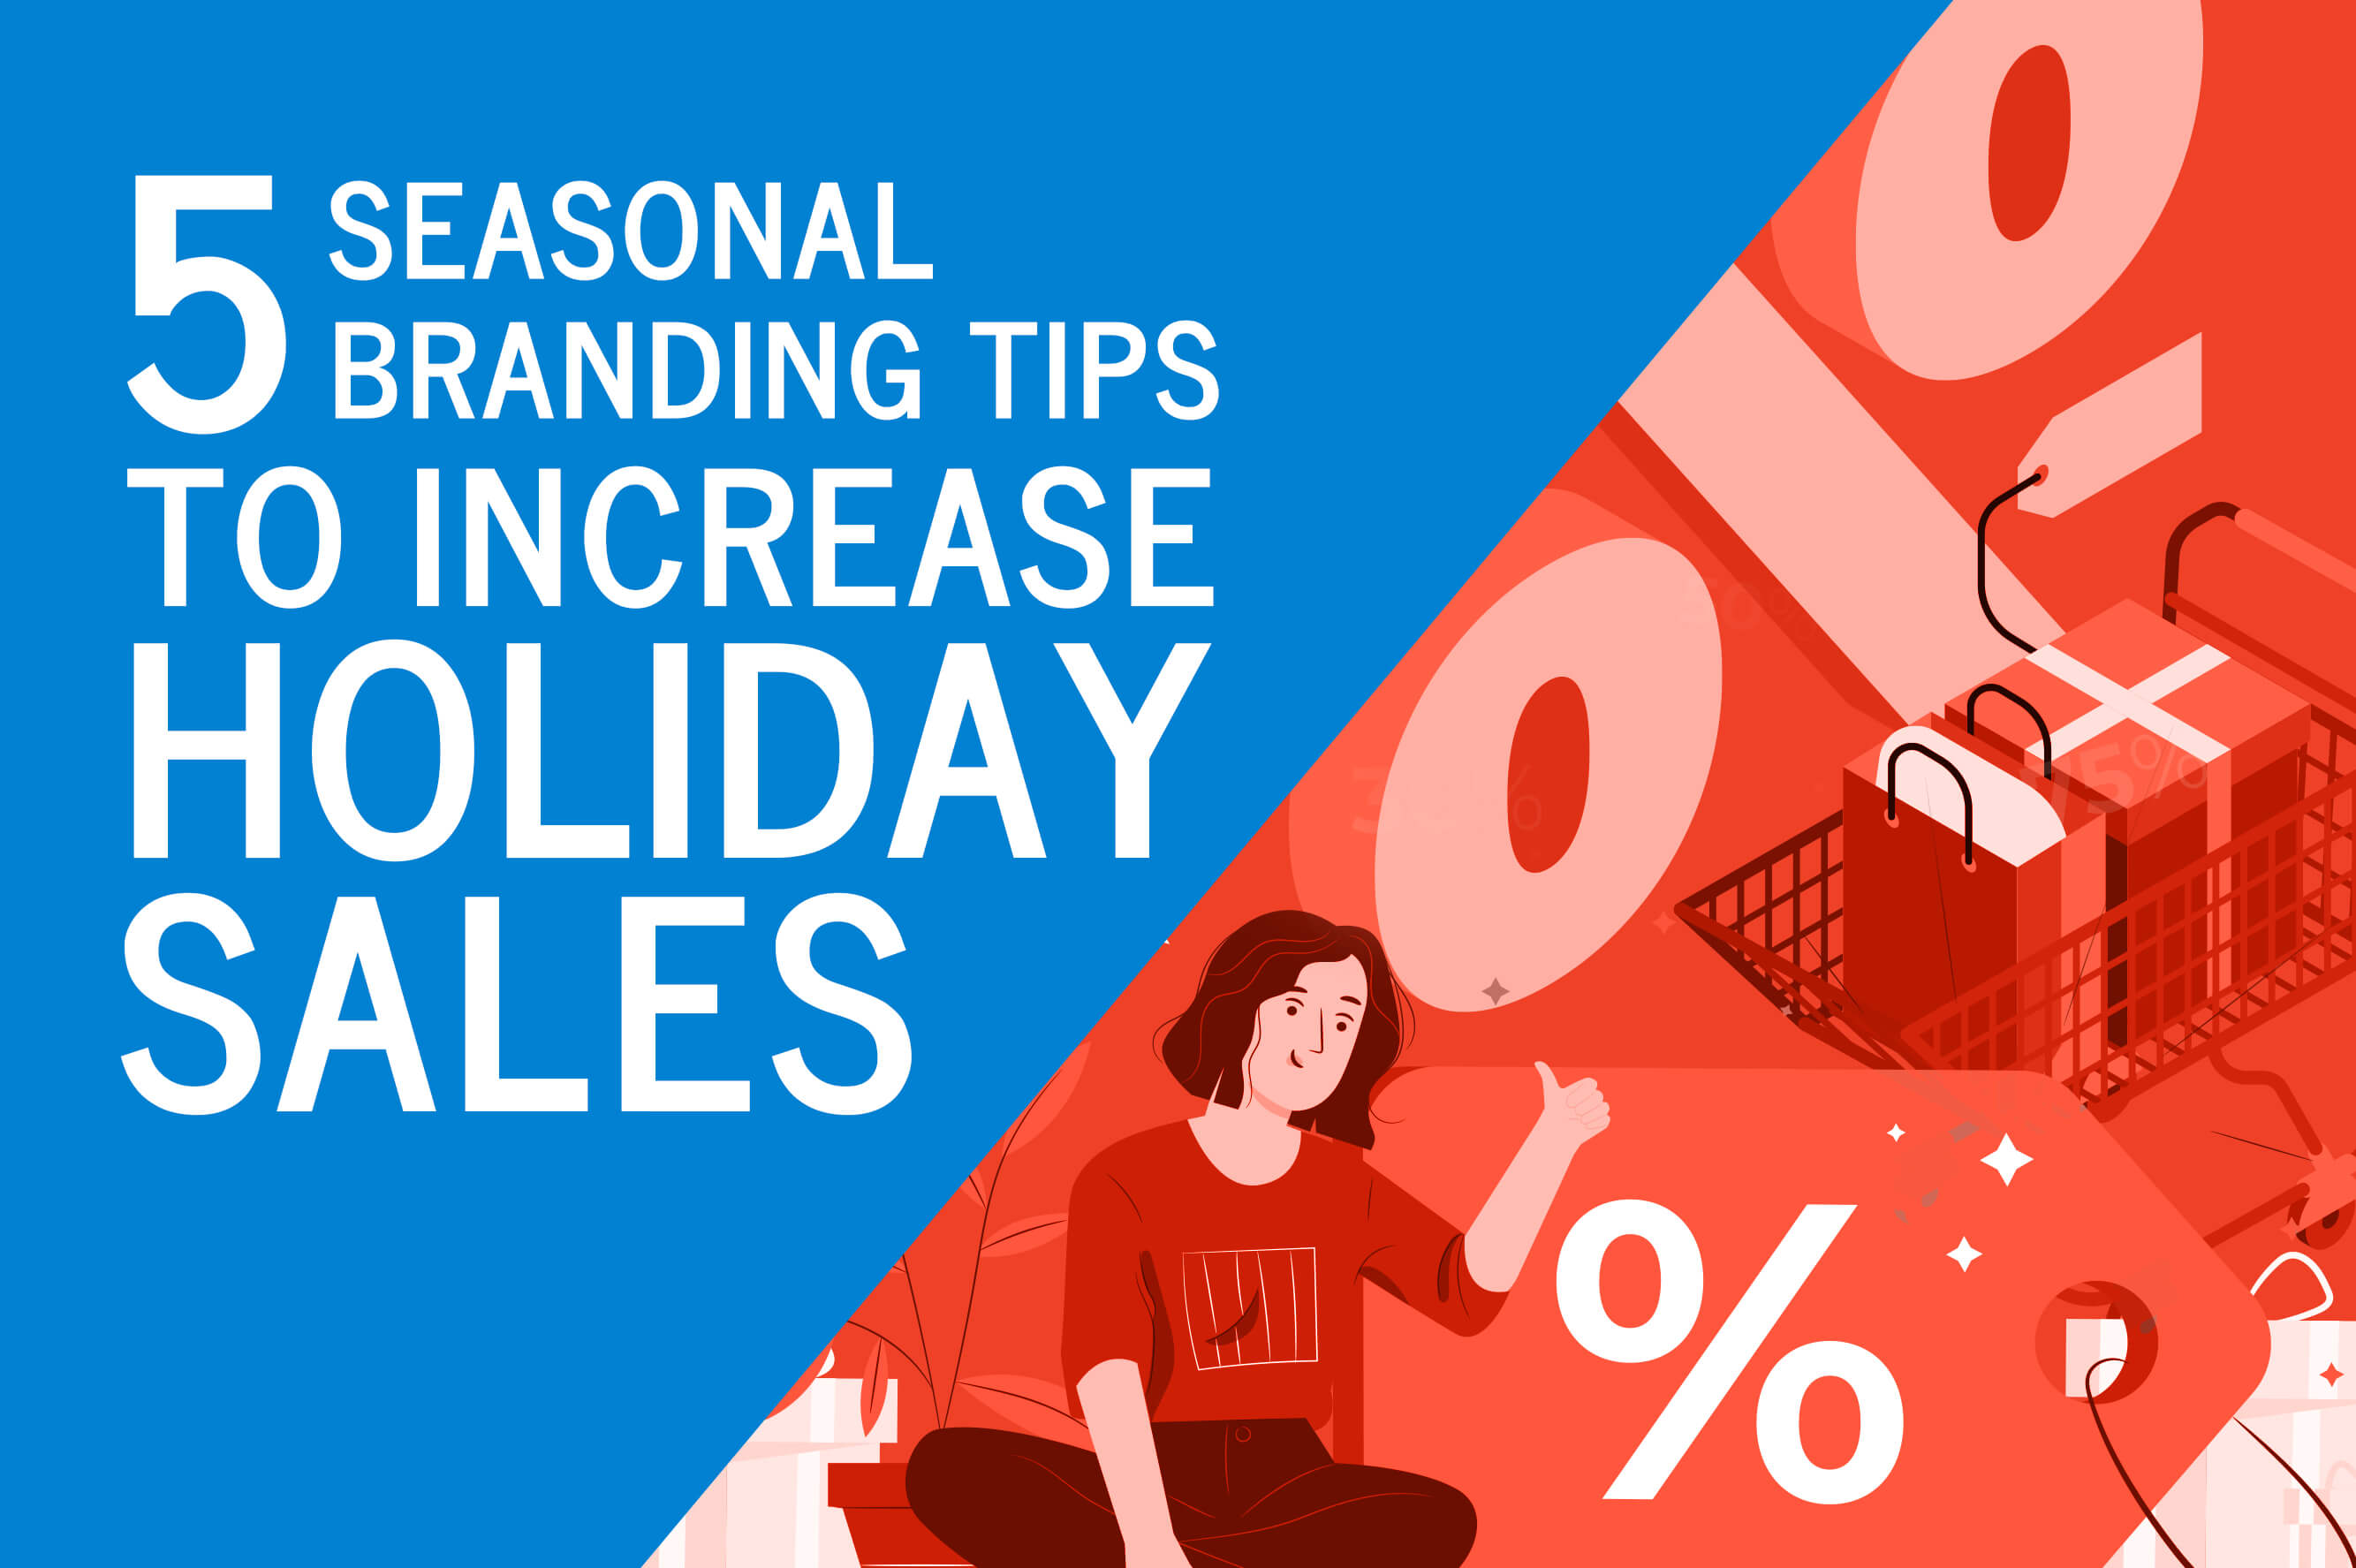 5 Seasonal Branding Tips to Increase Holiday Sales